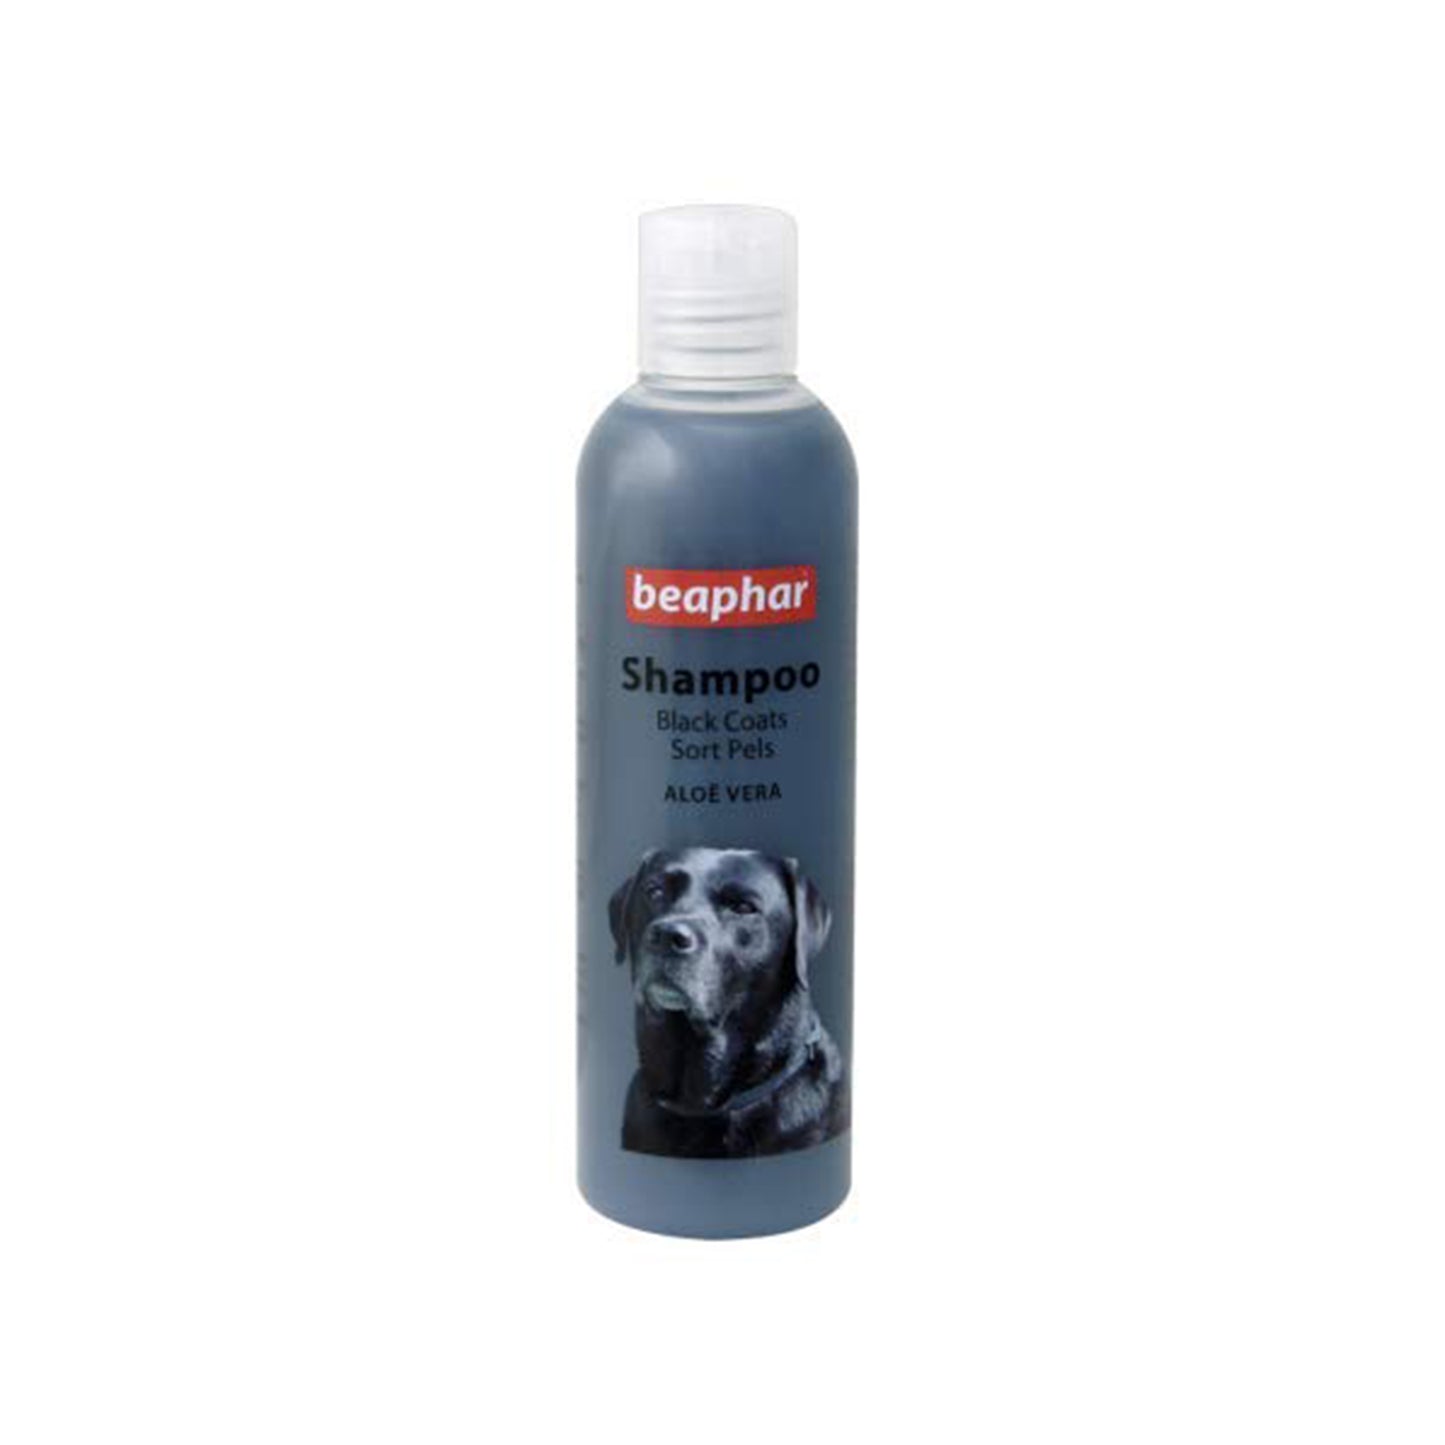 Beaphar - Black Coat Shampoo